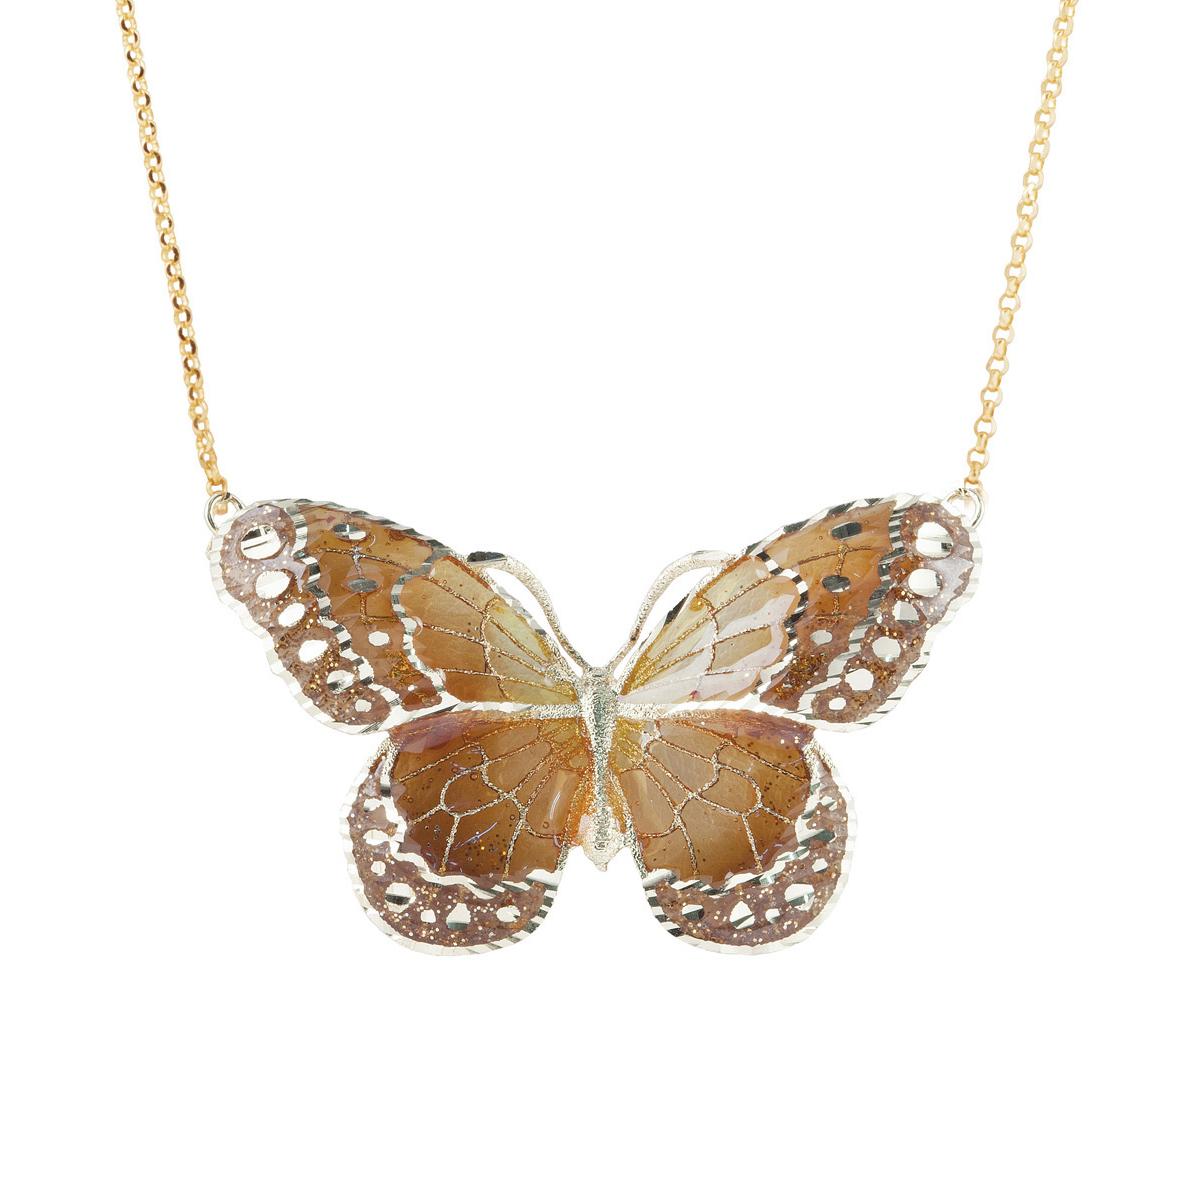 18 kt gold enamelled butterfly necklace - Artlinea S.r.l.